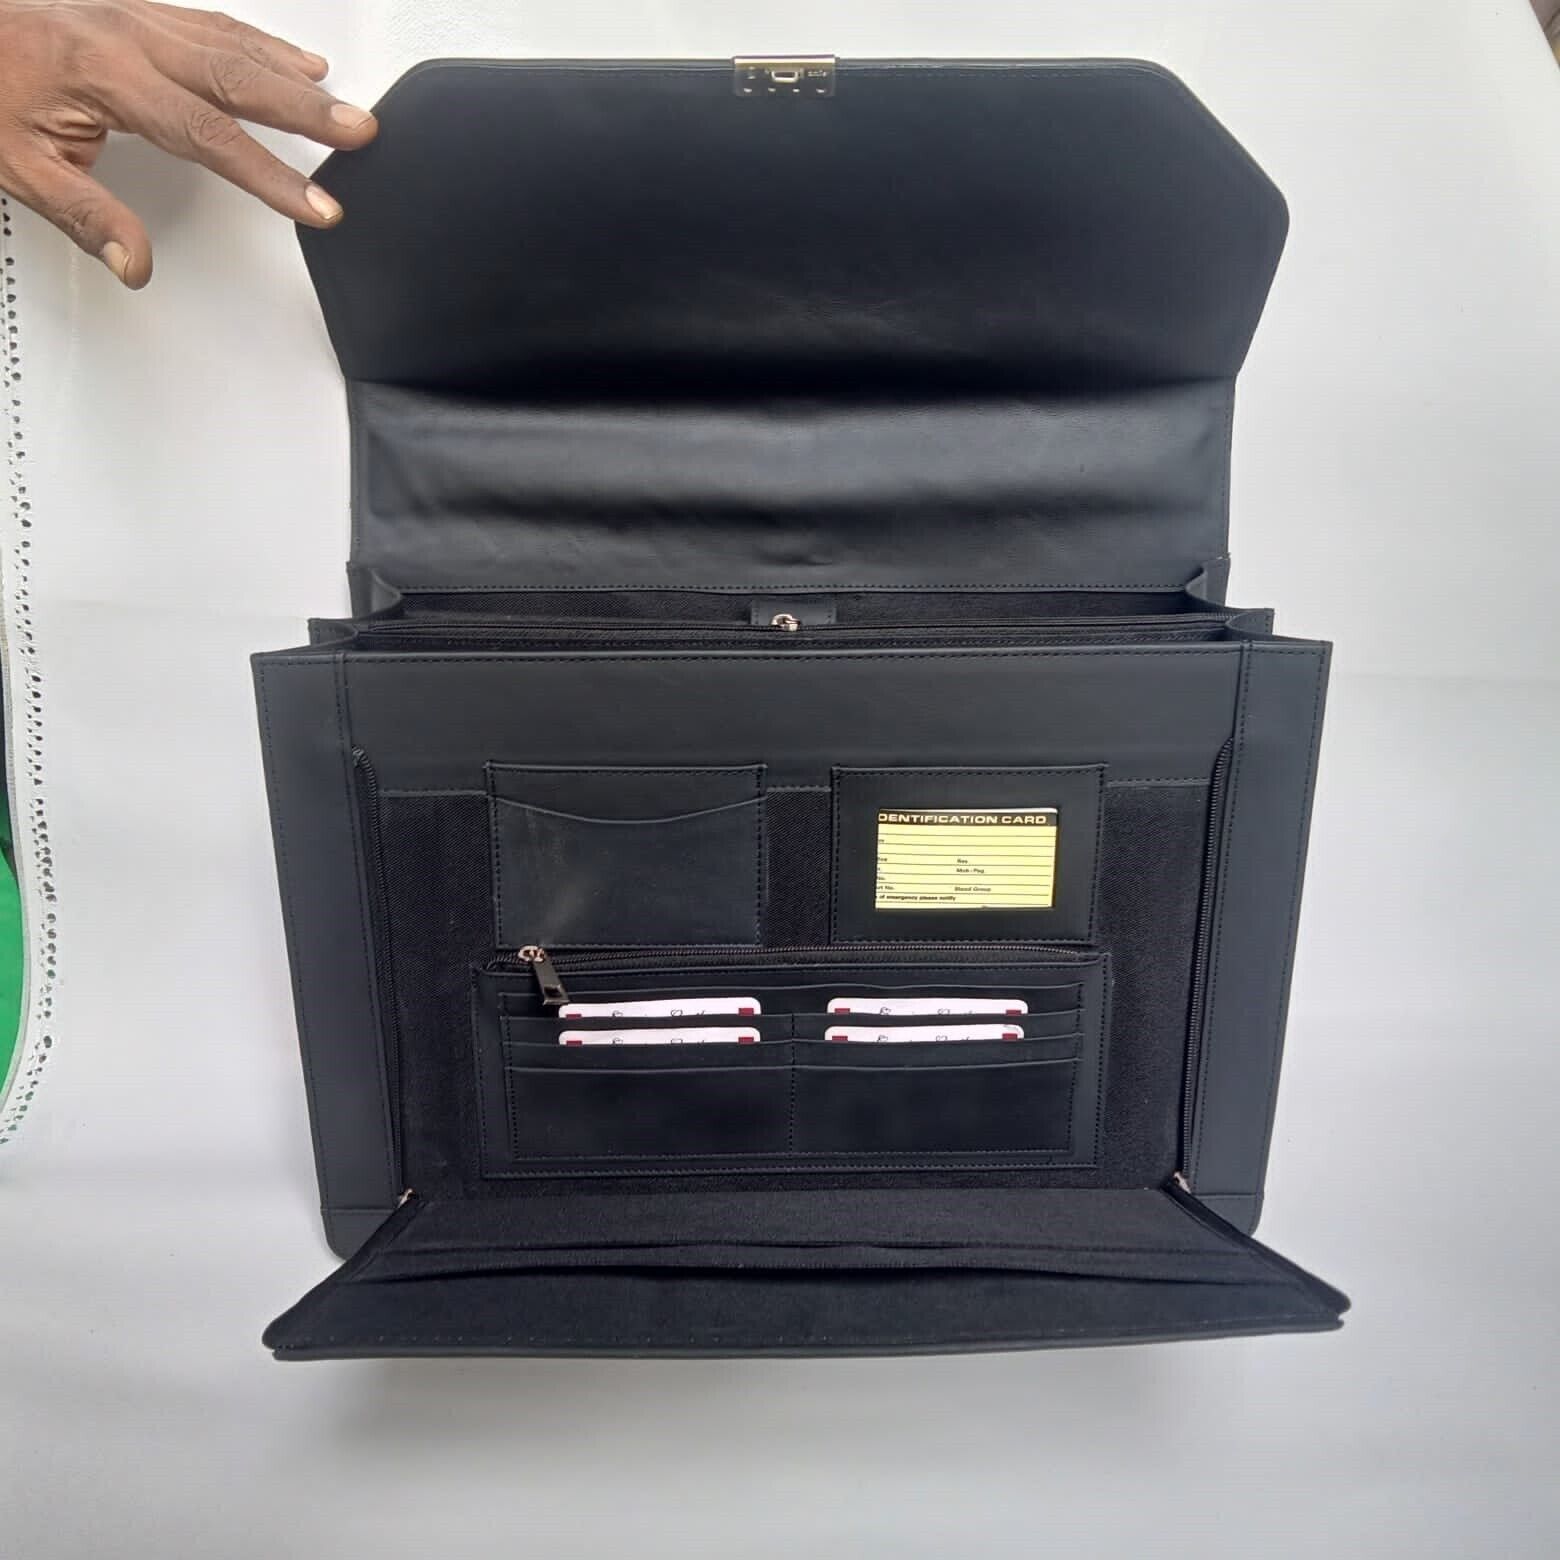  Leather Bag Travel bag Office laptop Best Quality Bag New Cow hide original Bag